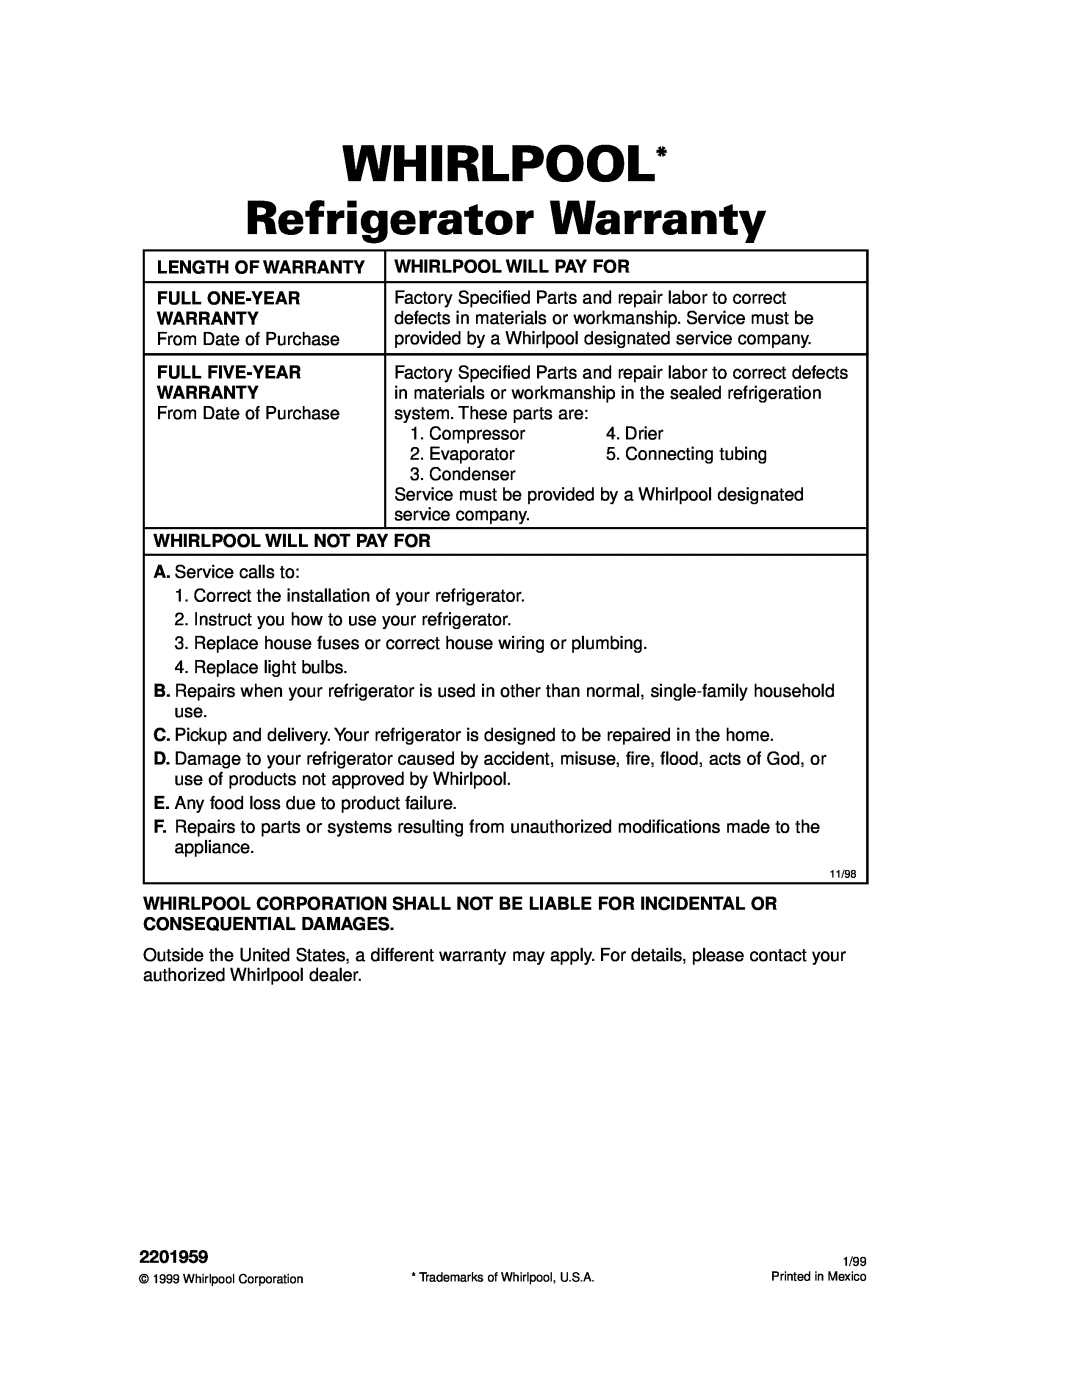 Whirlpool 2201959 manual Refrigerator Warranty, Whirlpool 